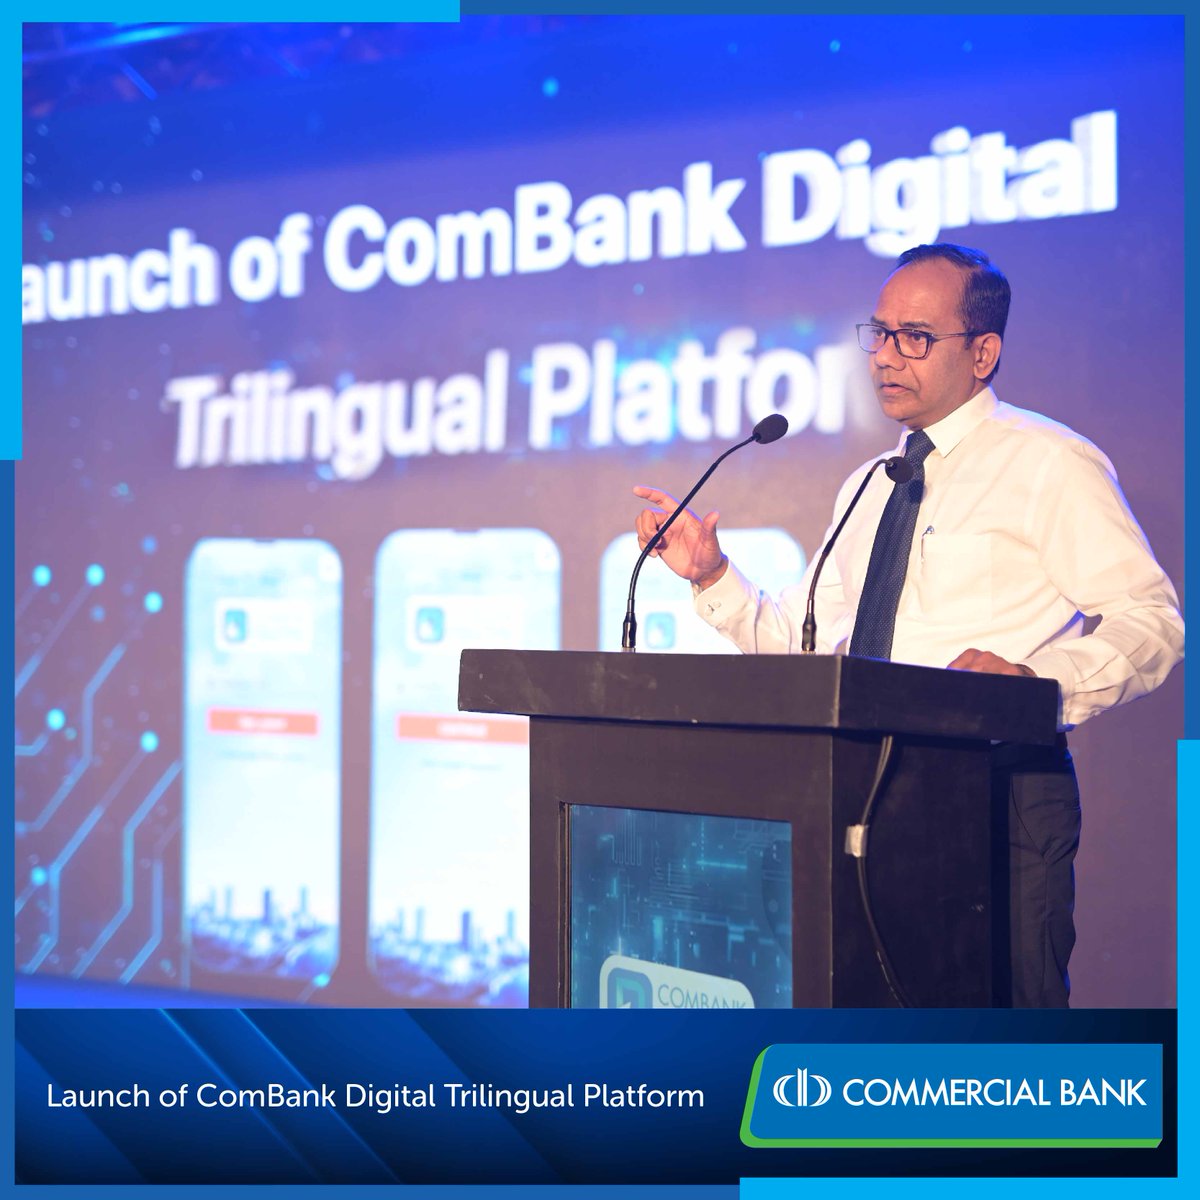 Celebrating Diversity and Innovation: A glimpse into the triumphant launch of ComBank Digital Trilingual Platform at BMICH. Bridging languages, connecting cultures. #ComBank #ComBankDigital #trilingual